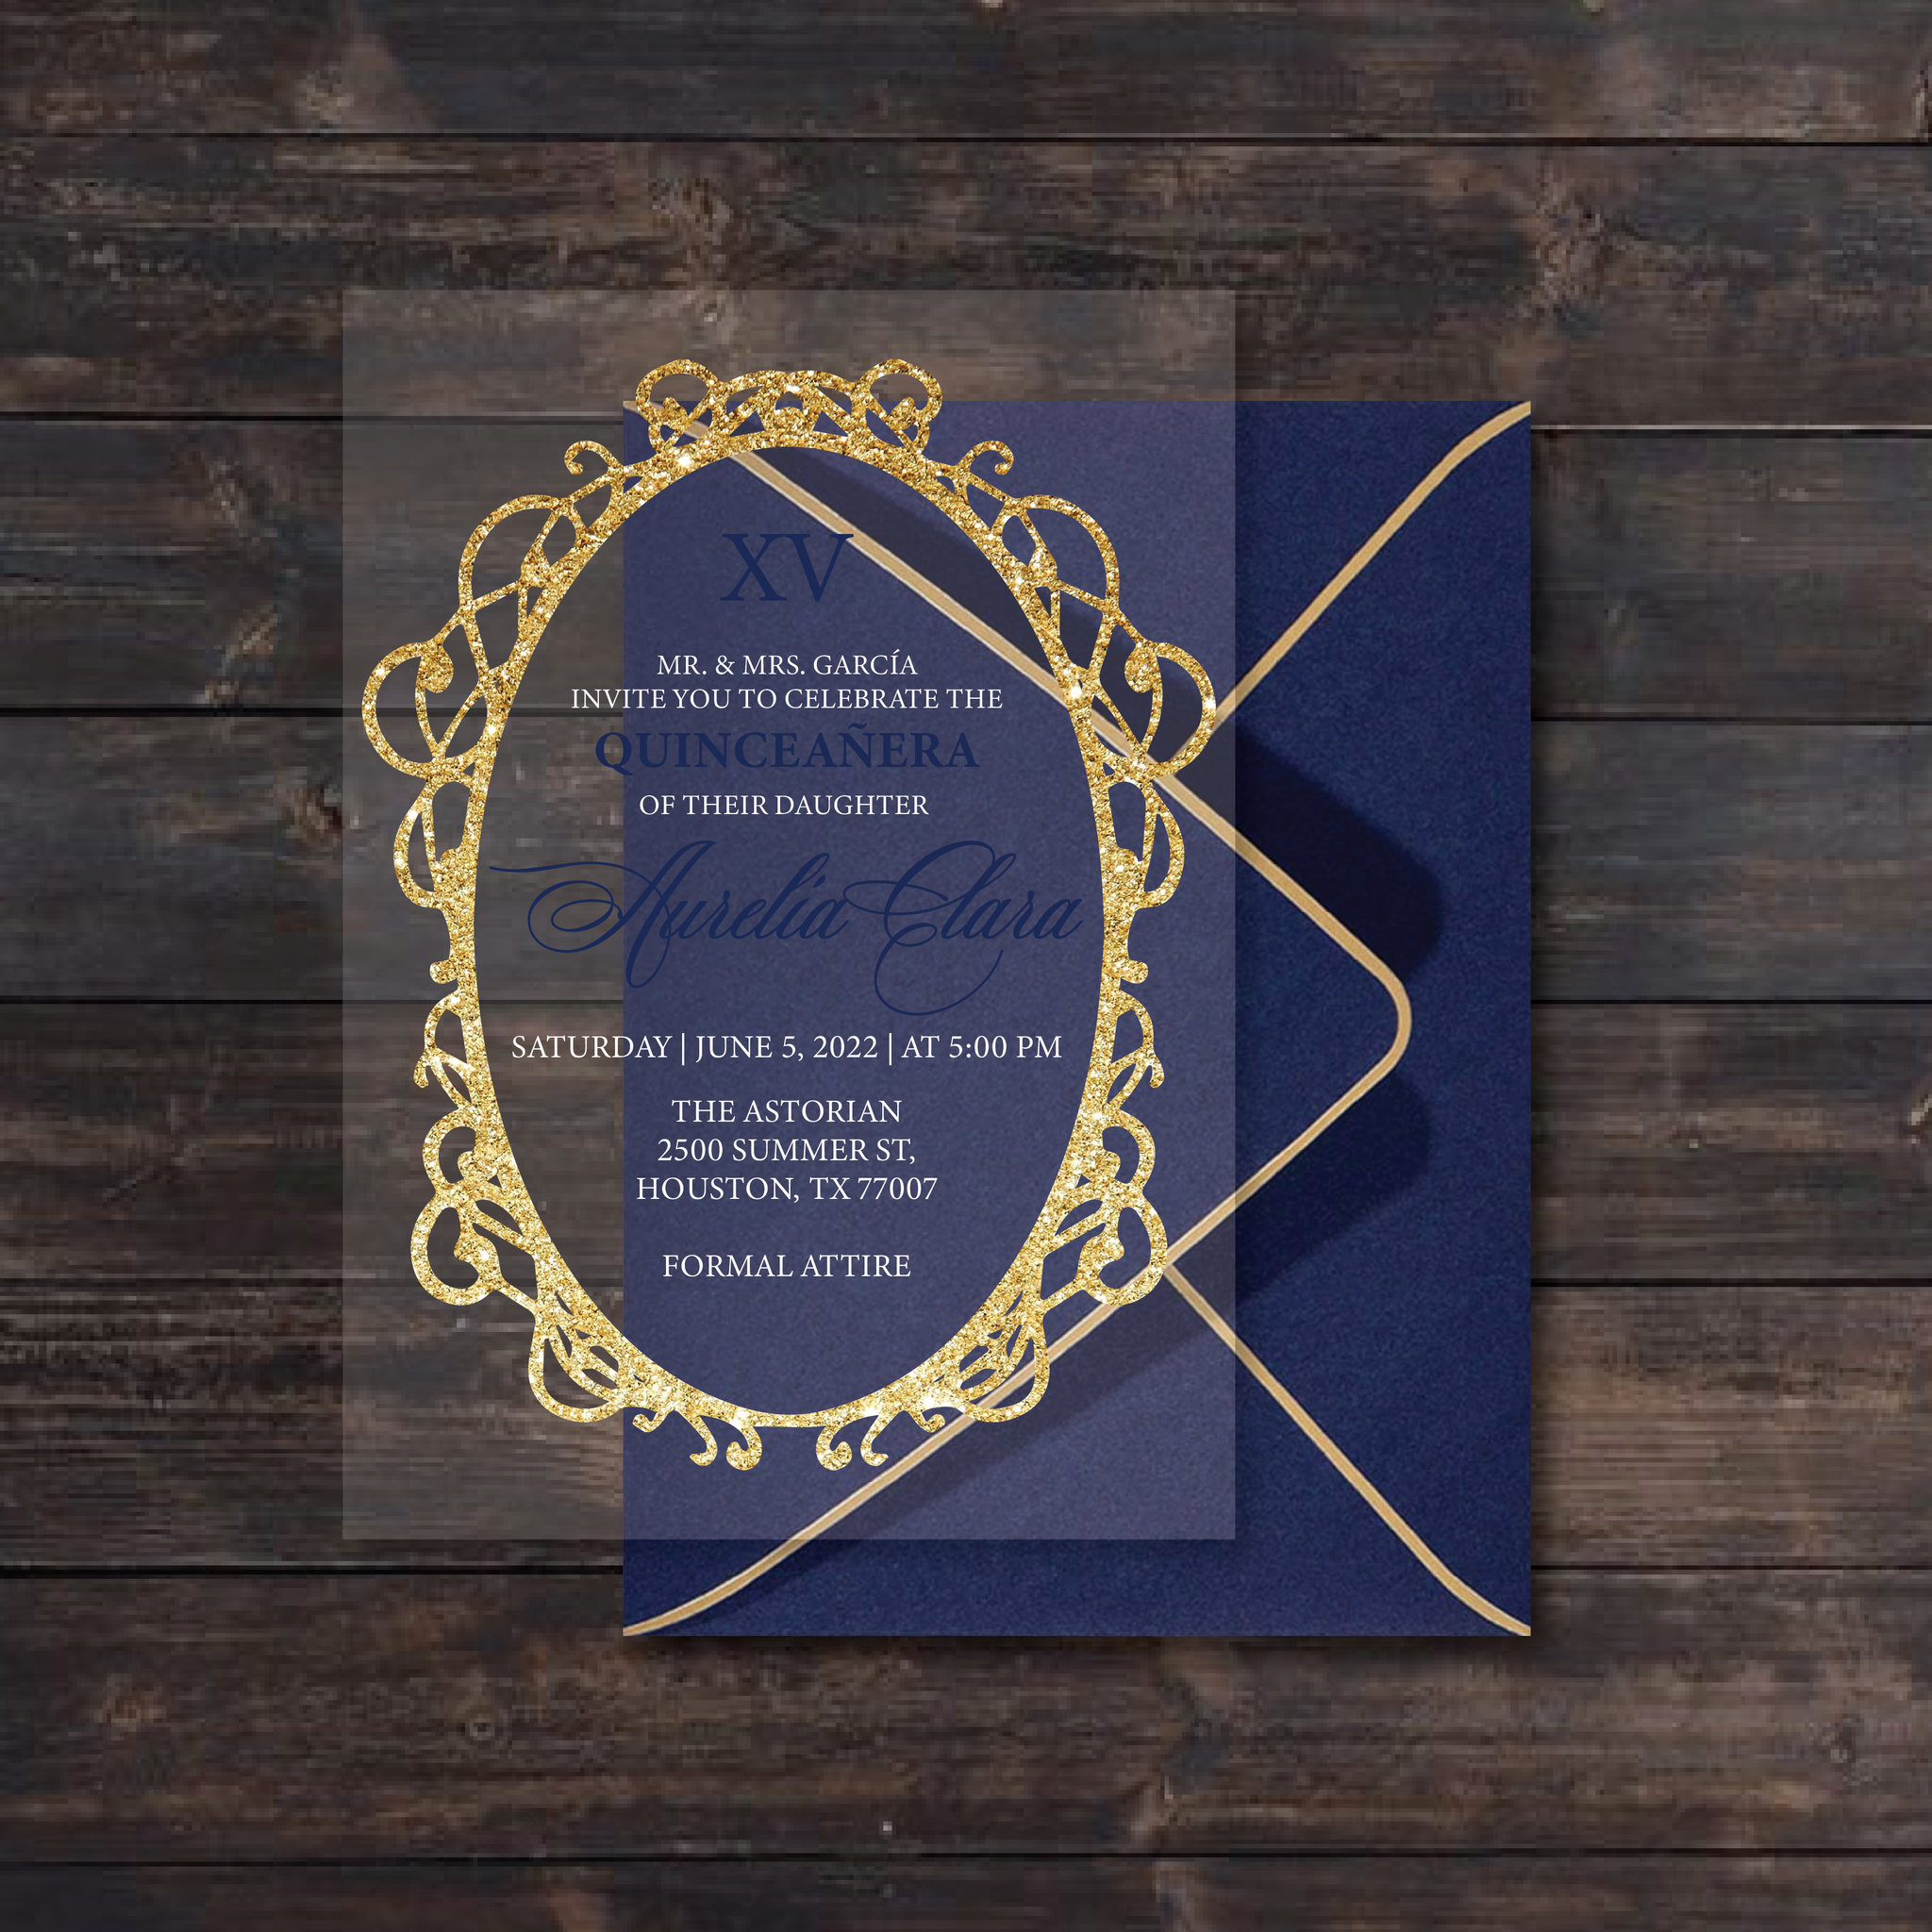 Gold Glitter Frame and Navy Blue Acrylic Invitation